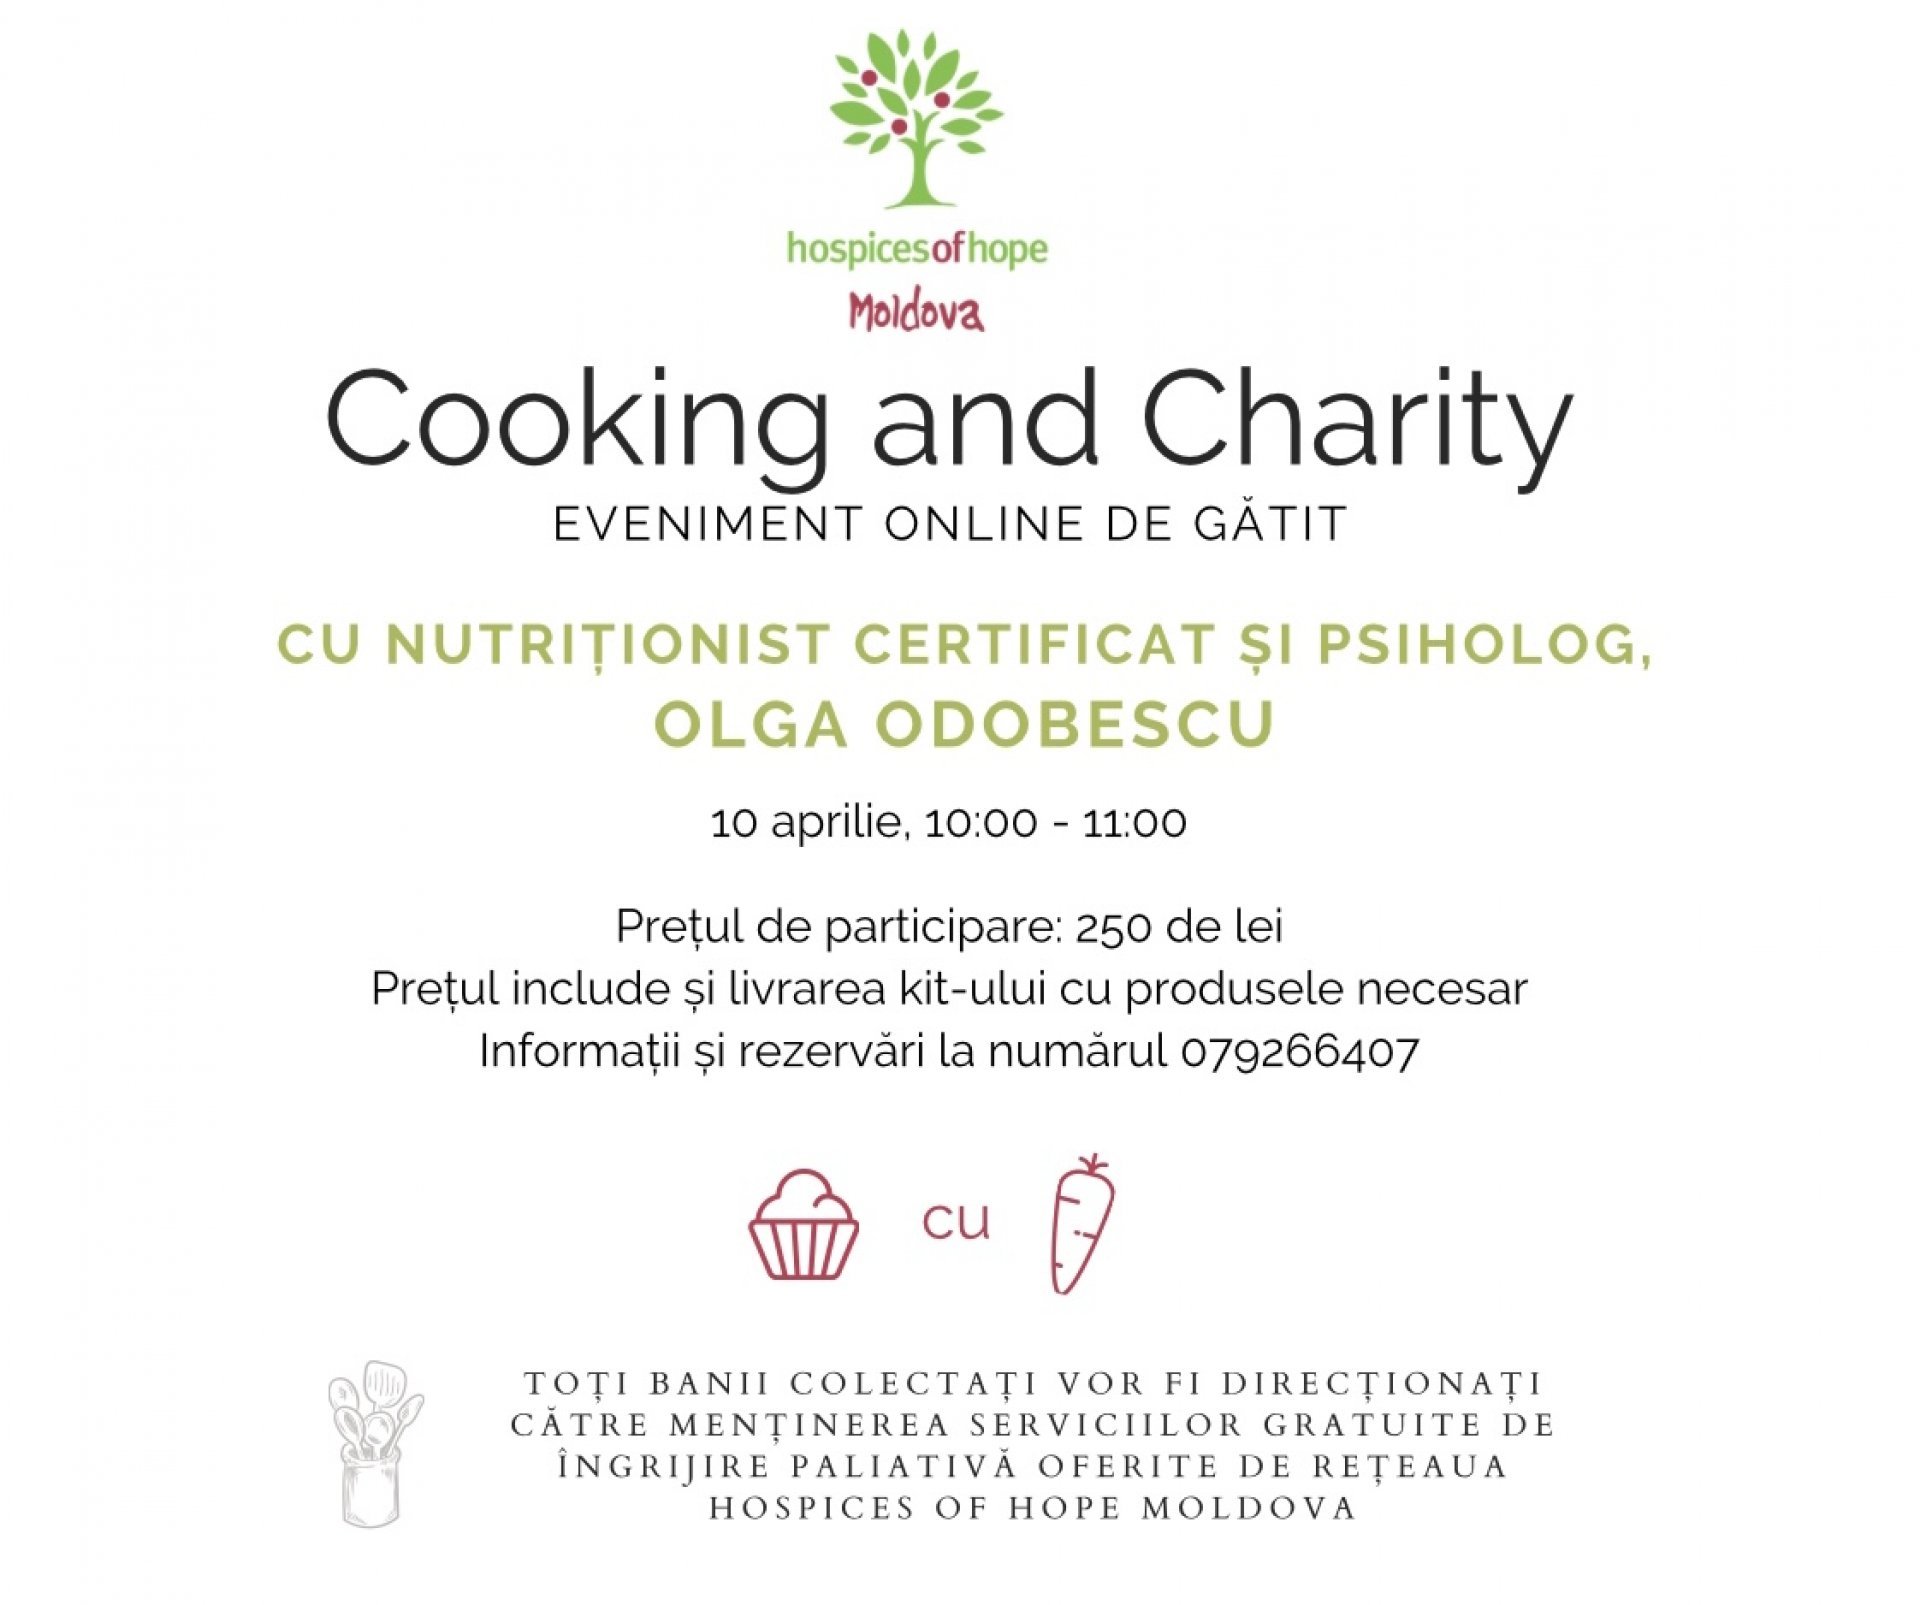 Cooking and Charity cu nutriționist certificat și psiholog, Olga Odobescu